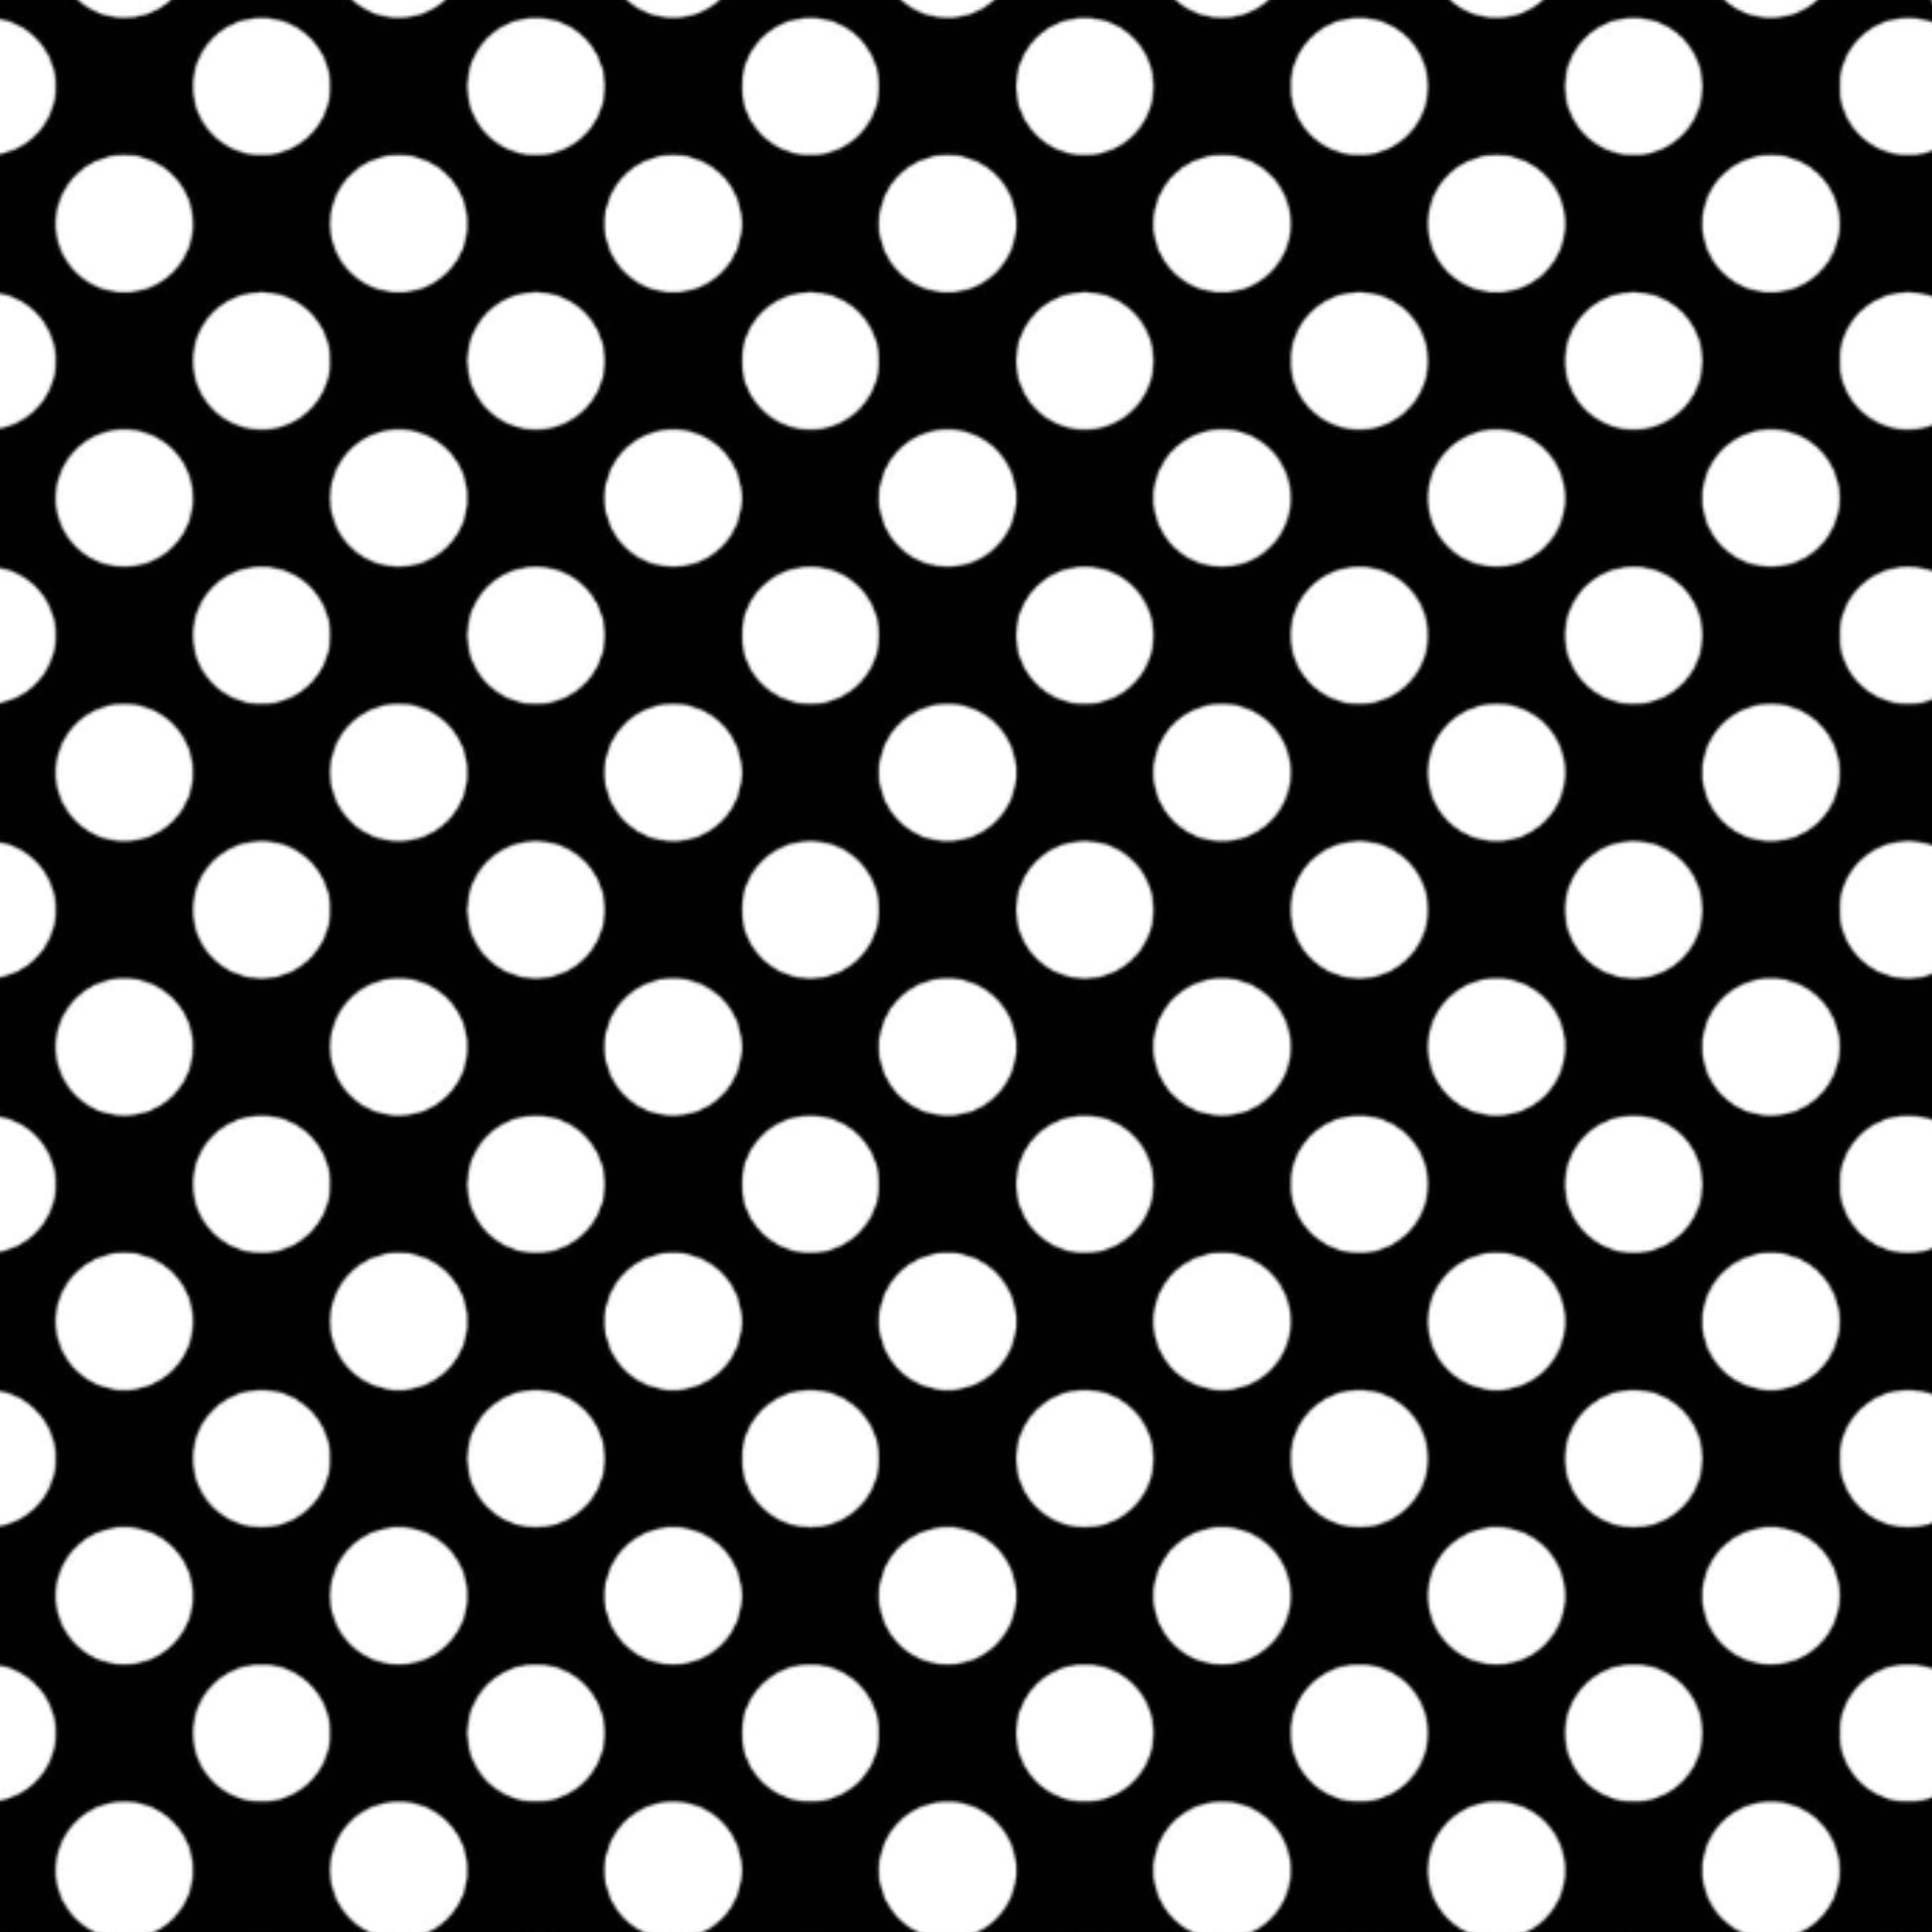 Spots-Anyone-Black-_-White-Monochrome-Polka-Dot-Mod-Retro-Vintage-Inspired-RainbowsAndFairies.com.au-SPOTS_ORG-01